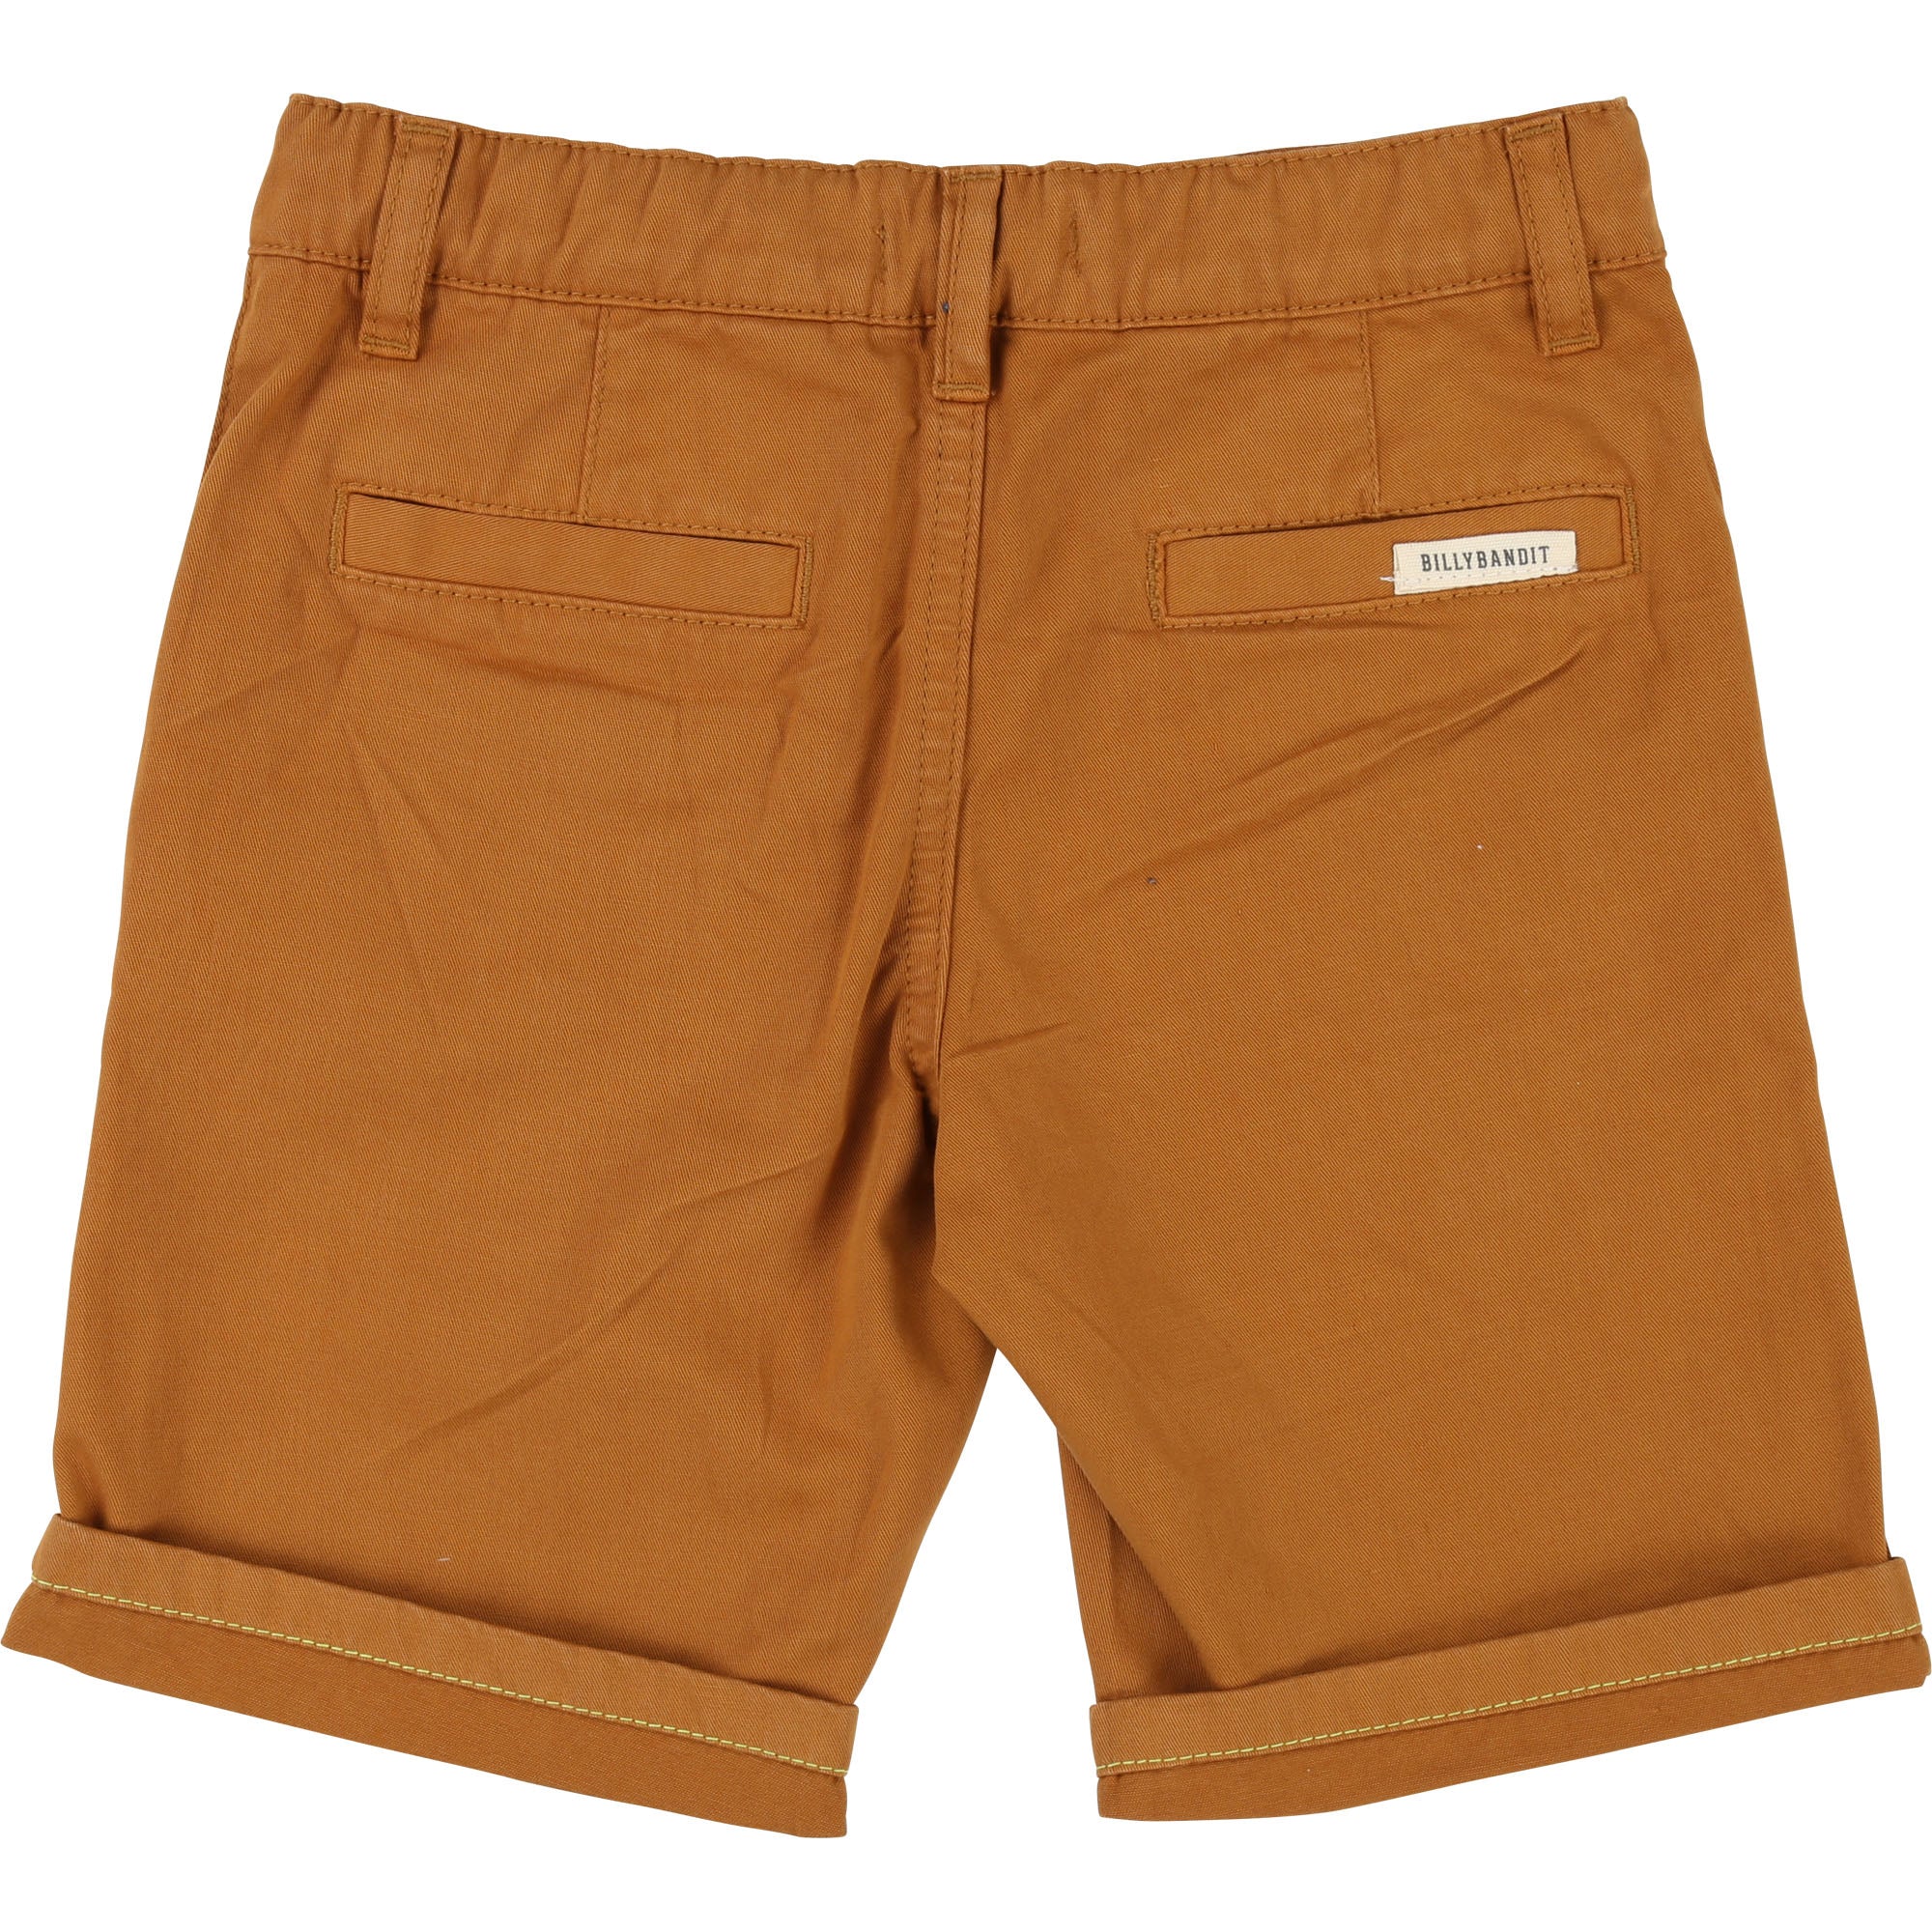 Boys Khaki Cotton Shorts